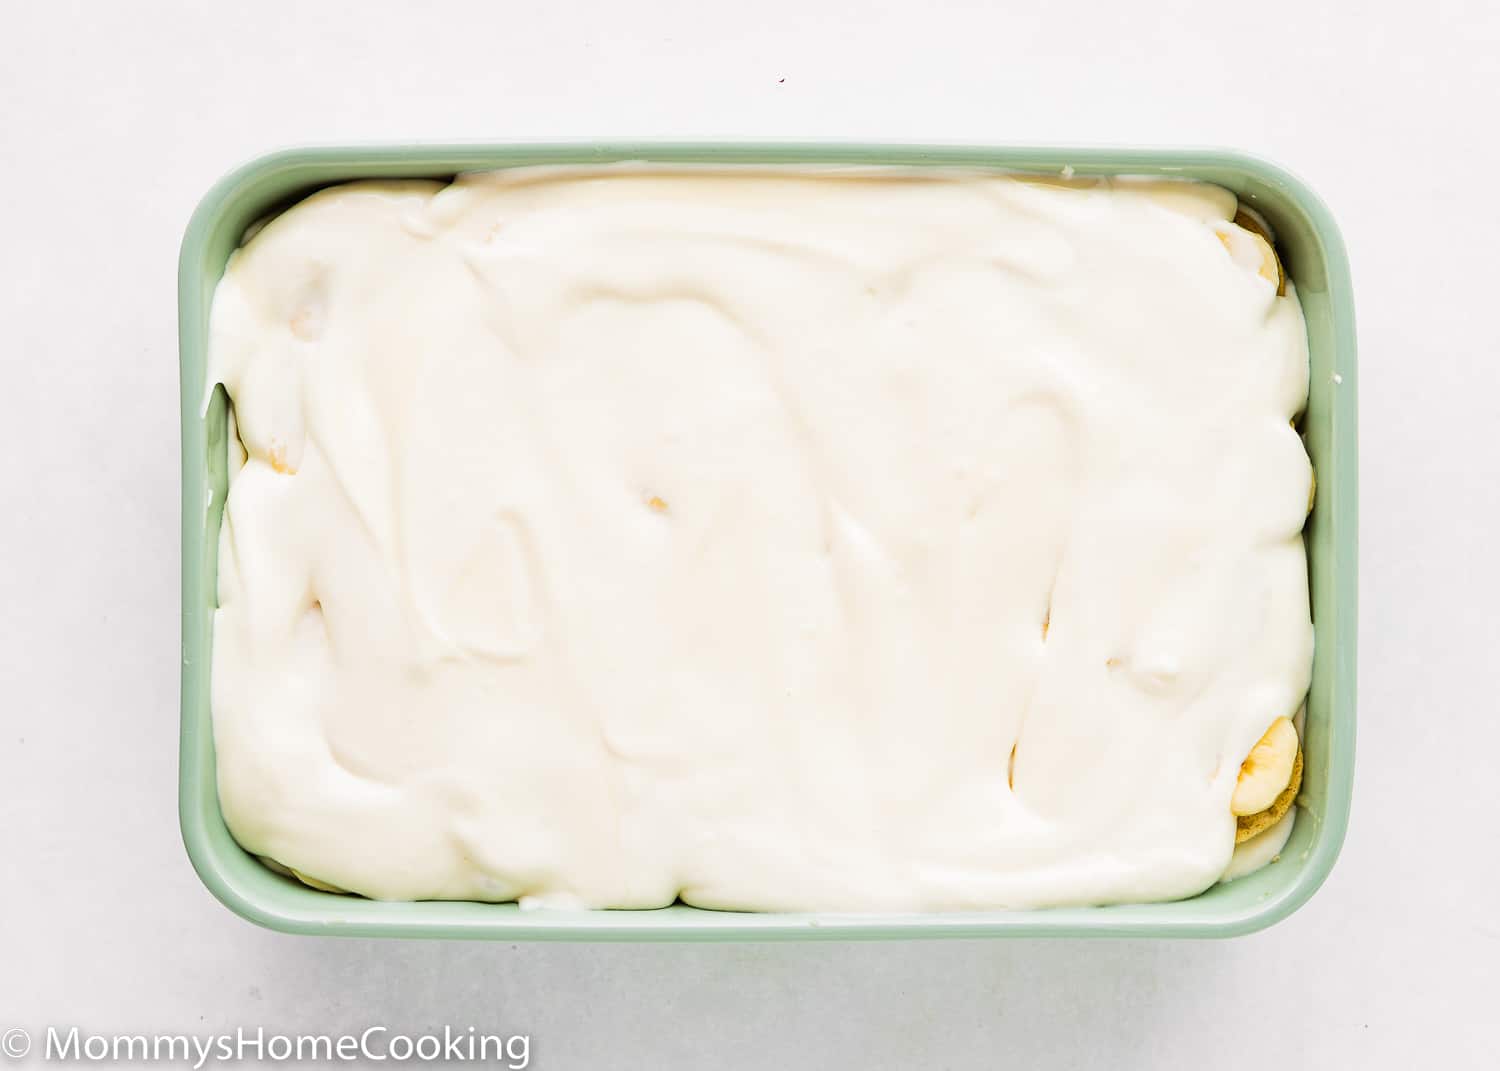 Homemade eggless banana pudding in a green rectangular dish.